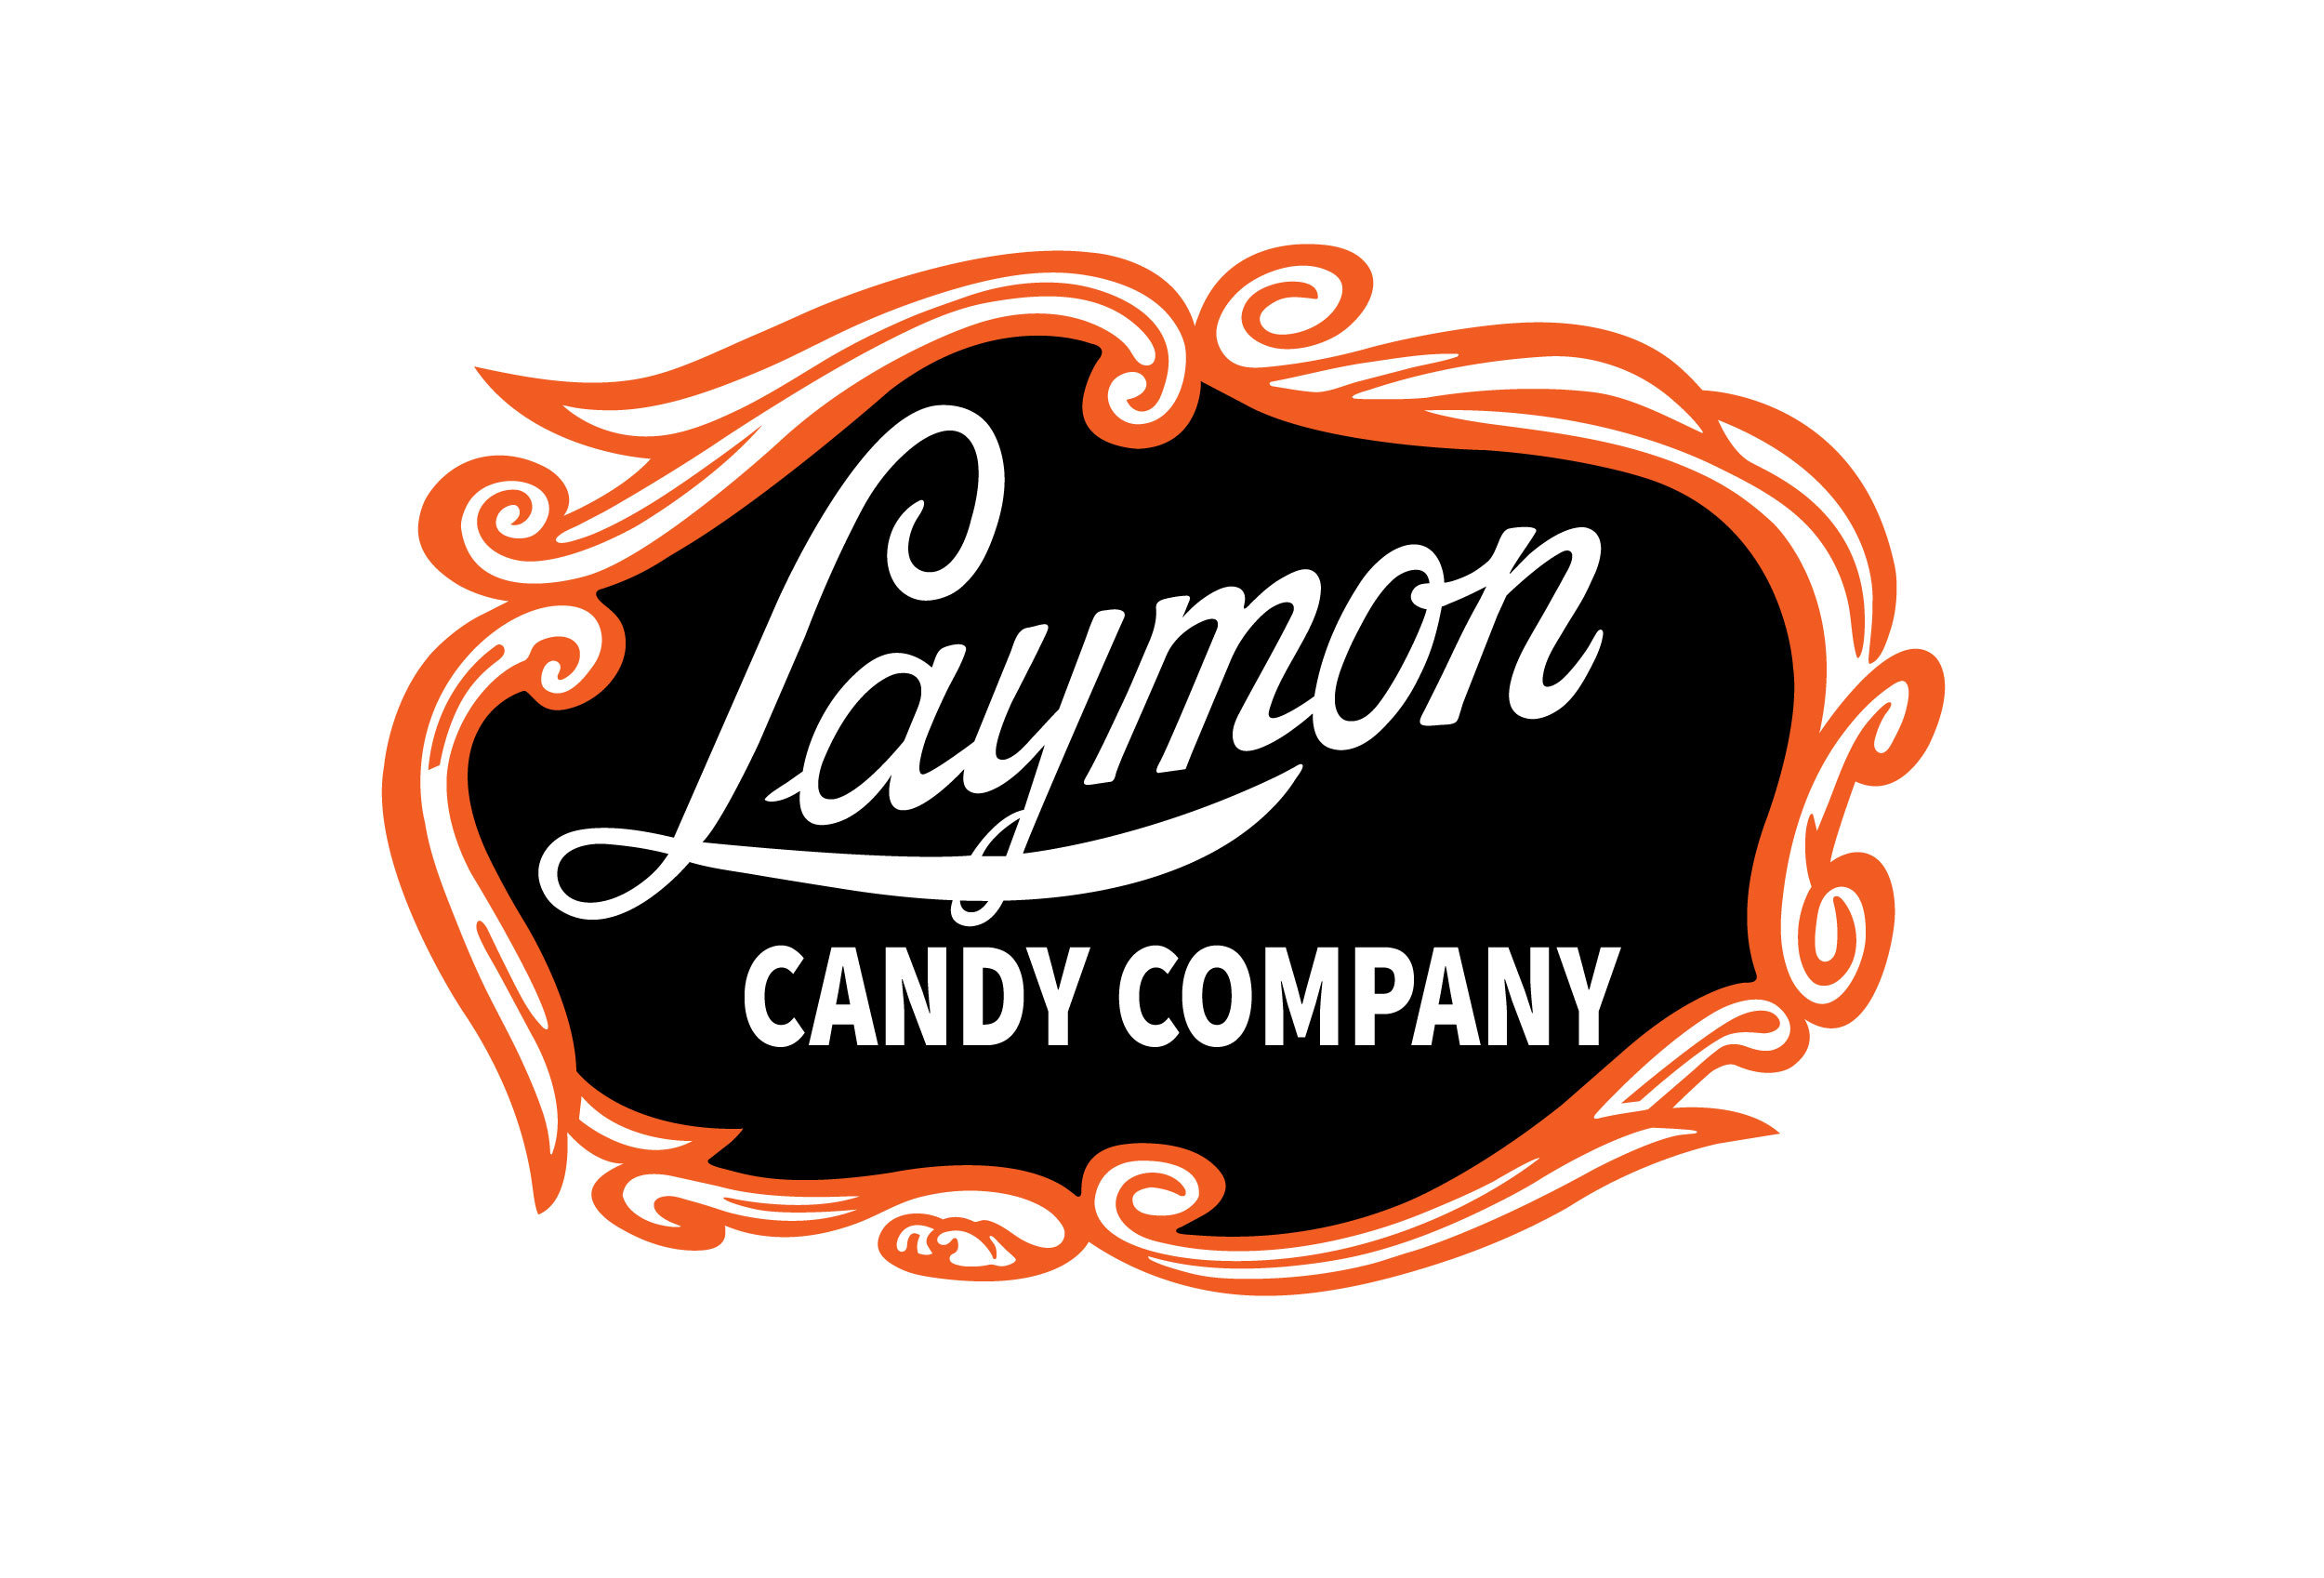 Laymon Candy Company